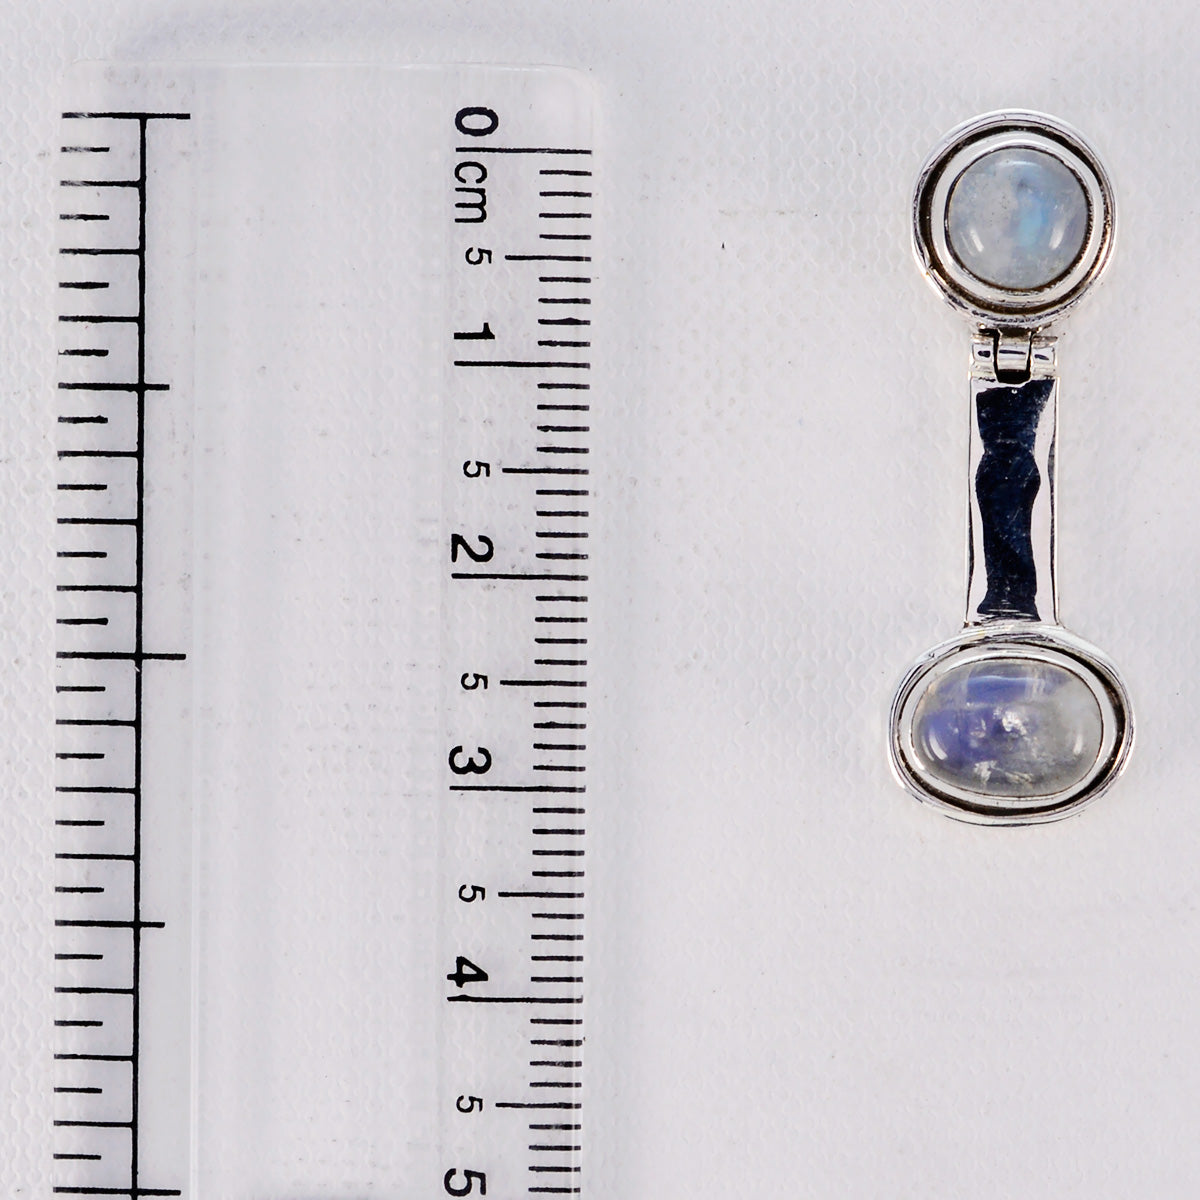 Riyo Real Gemstones multi shape Cabochon White Rainbow Moonstone Silver Earrings gift